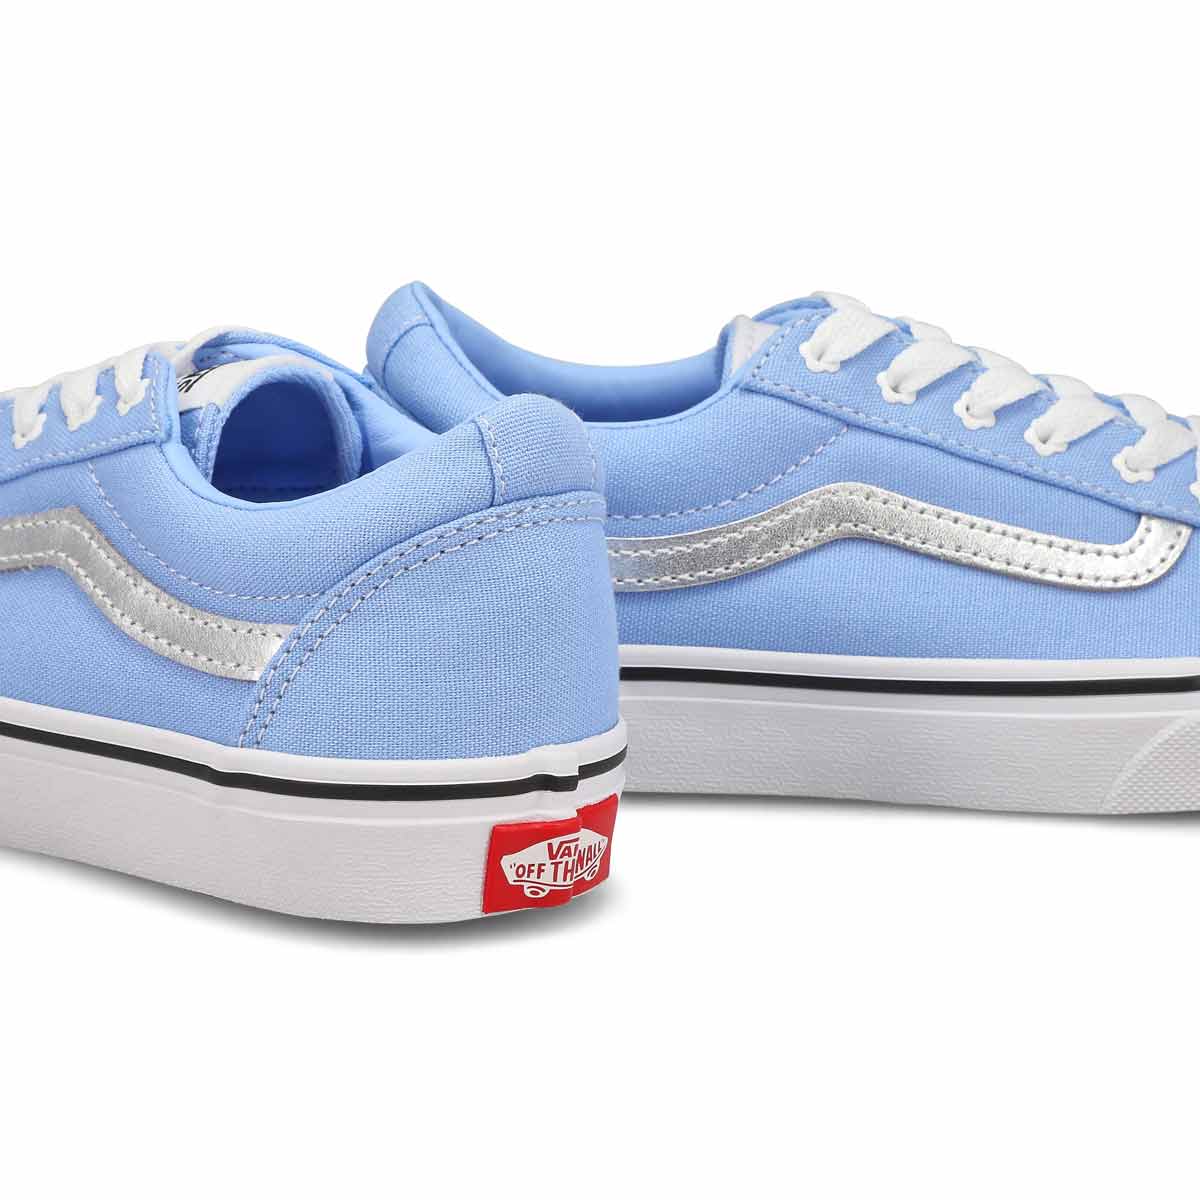 Girls' Ward Lace Up Sneaker - Blue/White